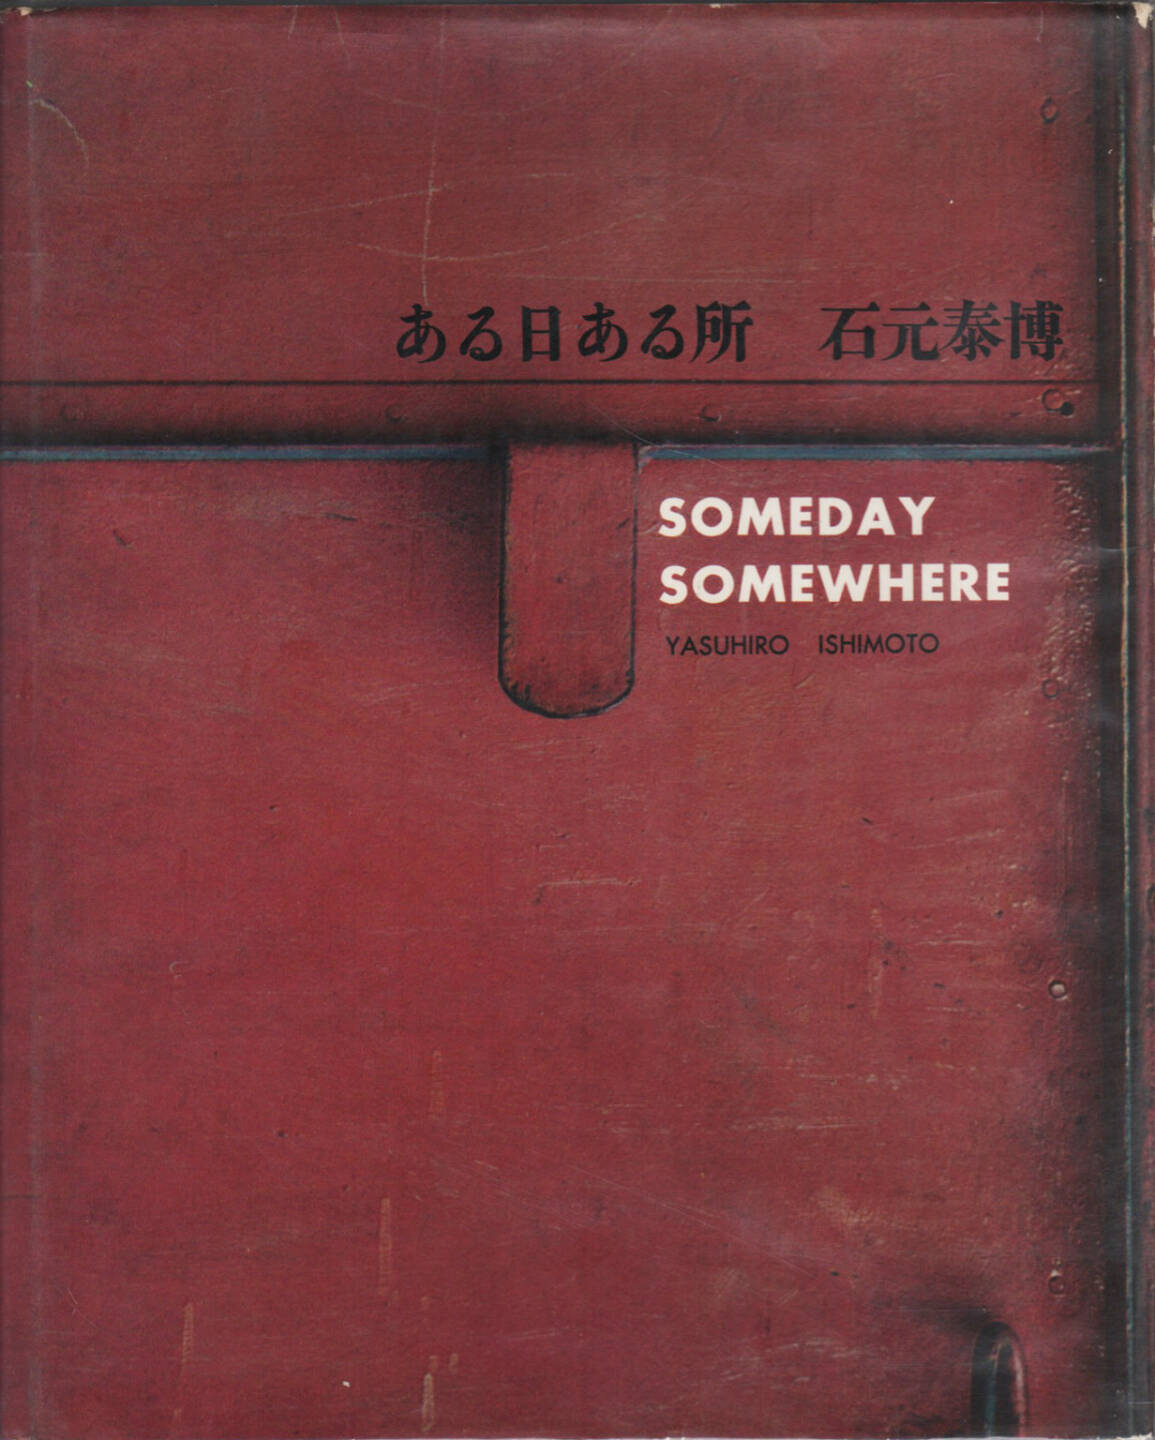 Yasuhiro Ishimoto - Someday Somewhere (Aru hi aru tokoro, 石元泰博 ある日ある所), Geibi Shuppan 1958, Cover -  http://josefchladek.com/book/yasuhiro_ishimoto_-_someday_somewhere_aru_hi_aru_tokoro_石元泰博_ある日ある所